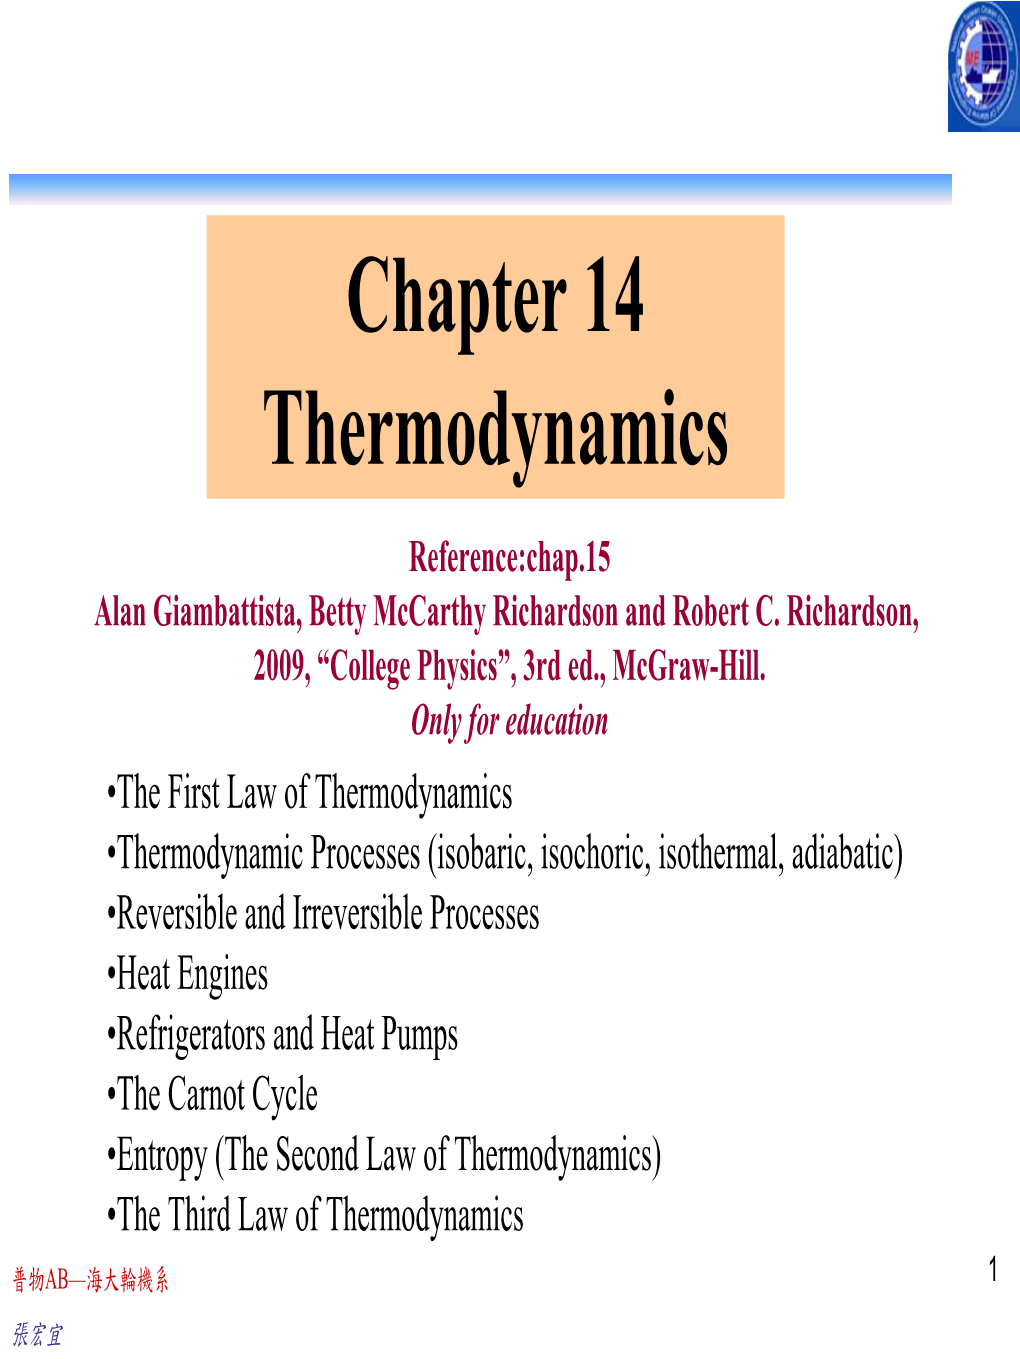 Chapter 15: Thermodynamics